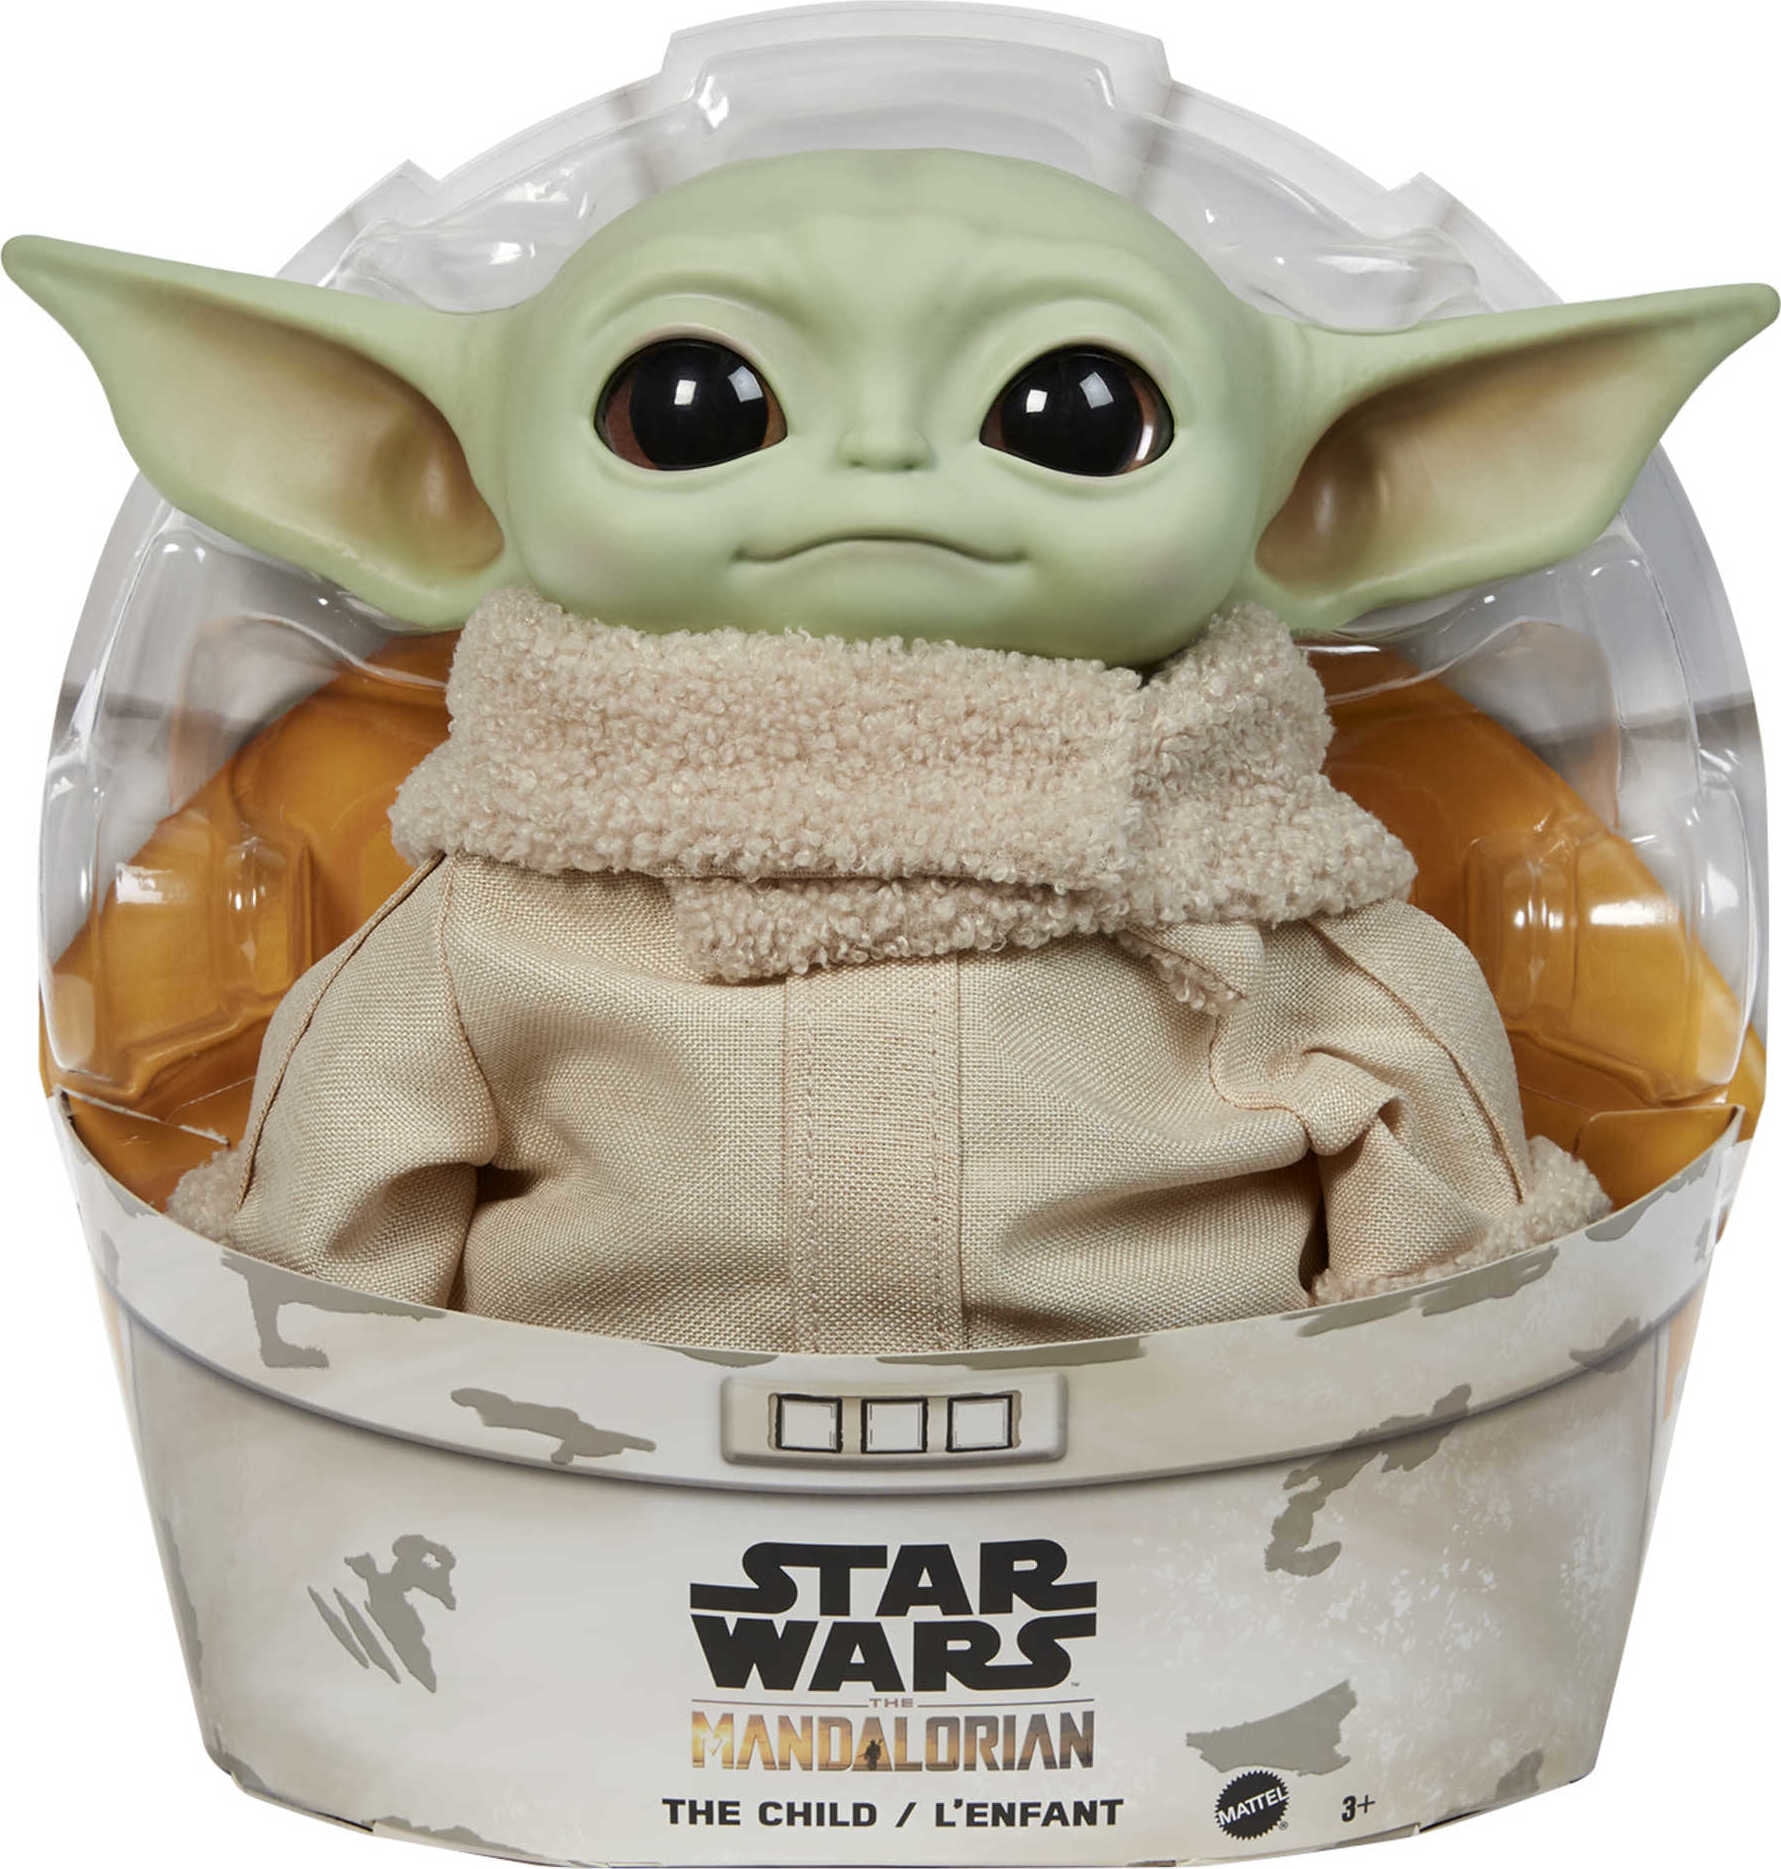 The Mandalorian GROGU The Child Baby Yoda Peluche Toy Disney TV Star Wars 